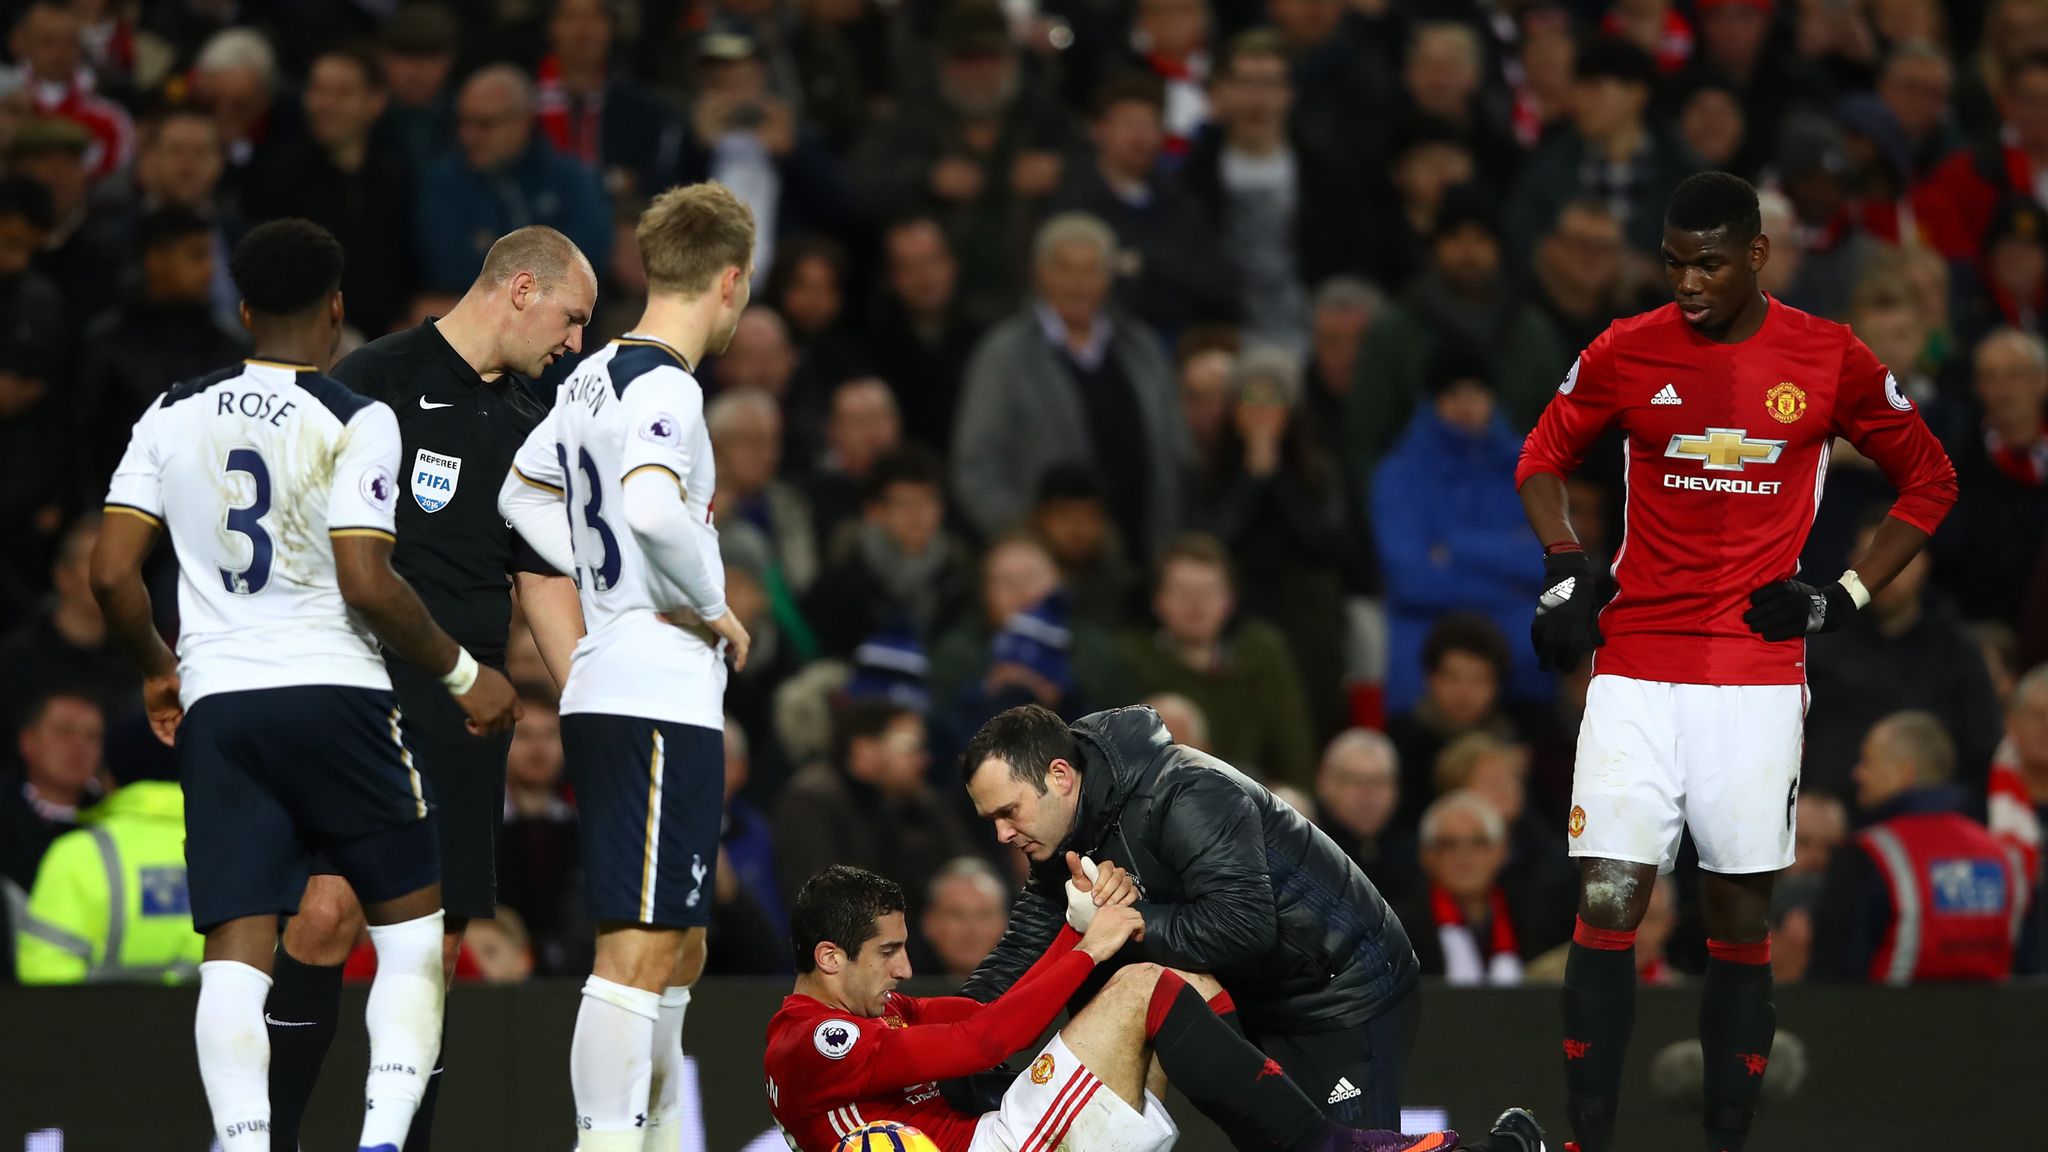 Mkhitaryan scores, gets hurt as Man United beats Spurs 1-0